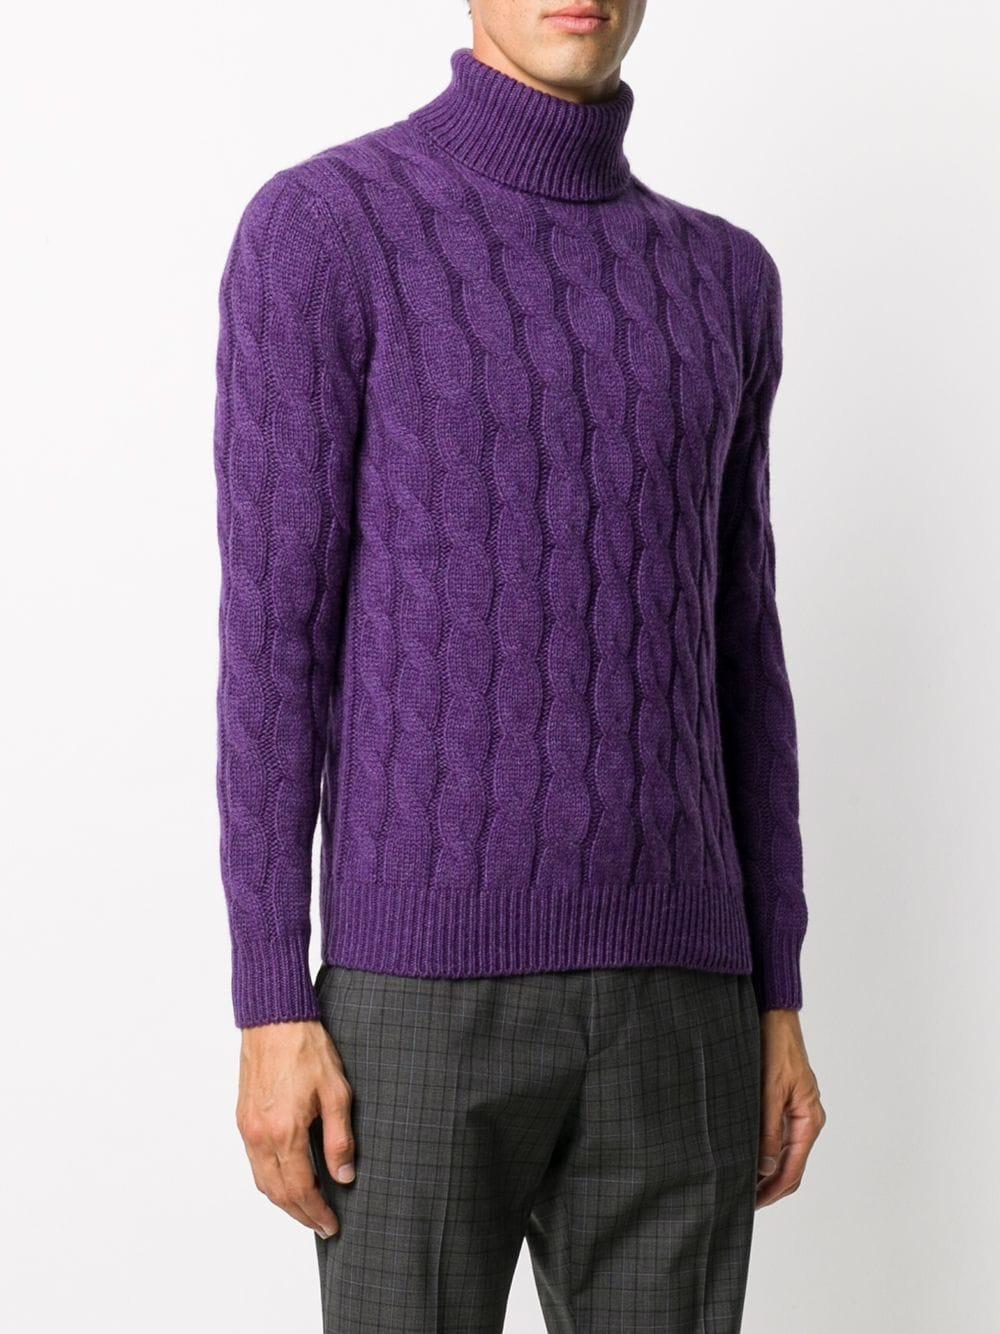 Lardini Cashmere Roll-neck Cable Knit Sweater in Purple for Men - Lyst